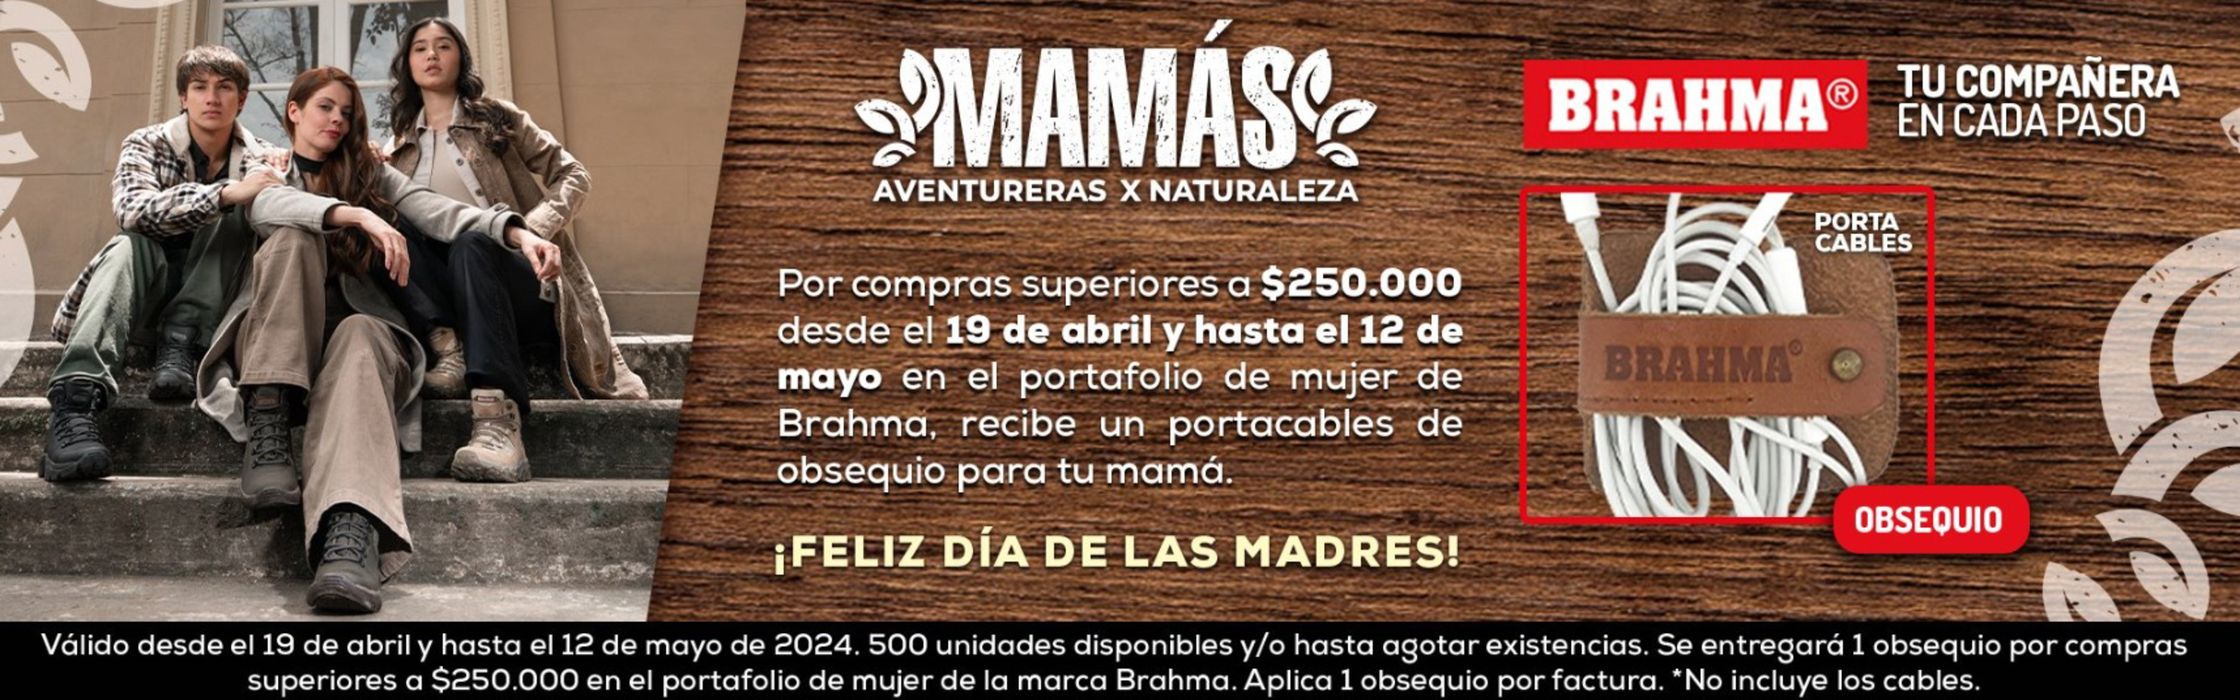 Catálogo Brahma en Mosquera Cundinamarca | Feliz dia de madres! | 25/4/2024 - 12/5/2024